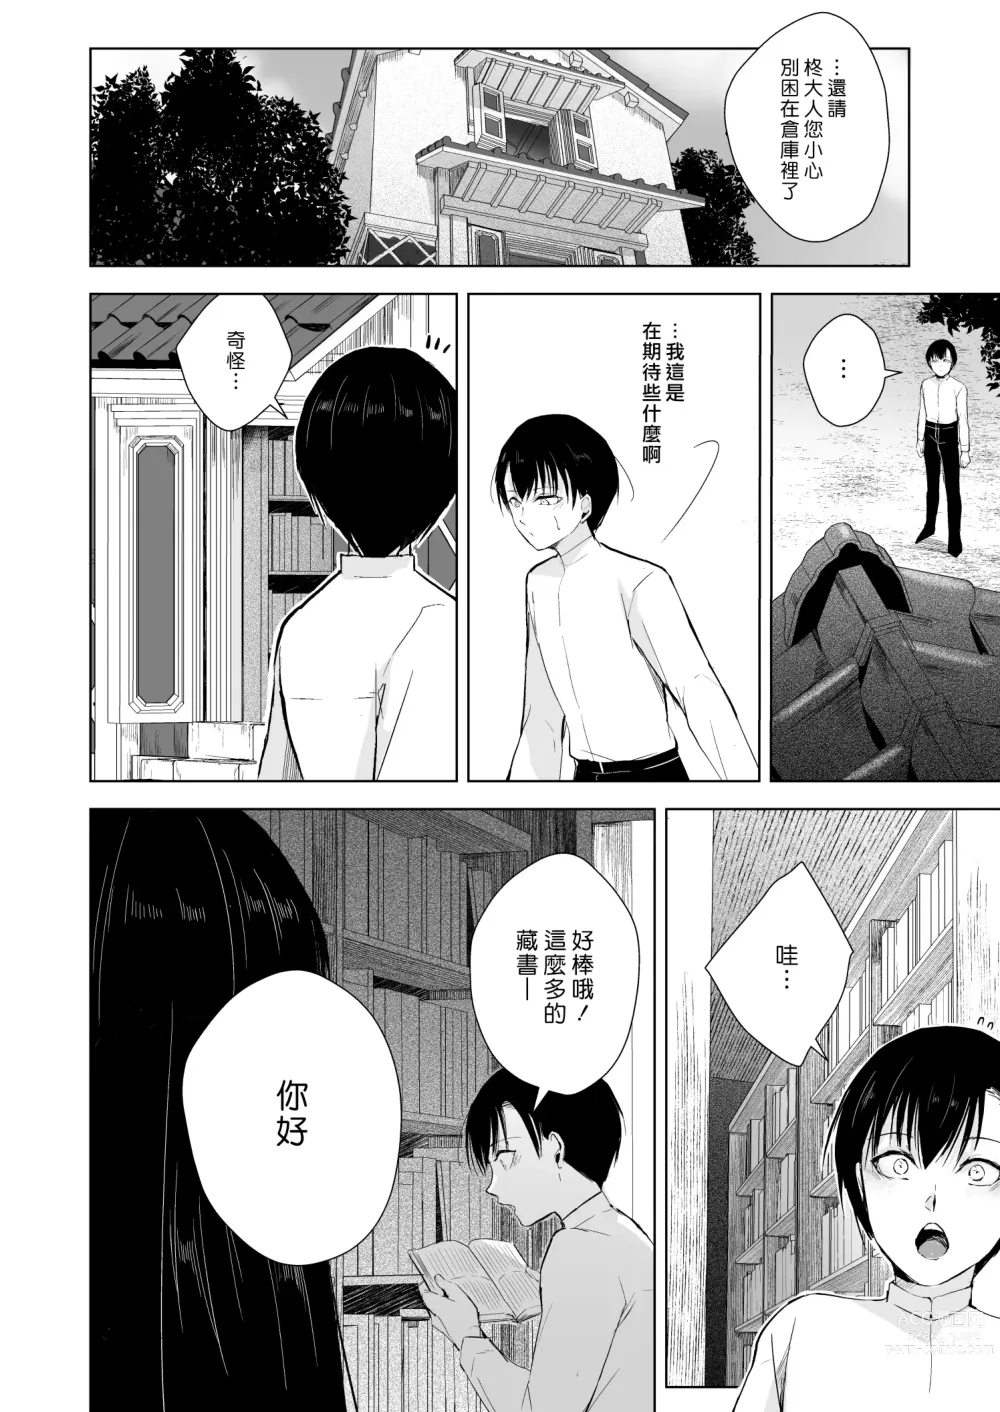 Page 6 of doujinshi 和楓小姐在倉庫裡